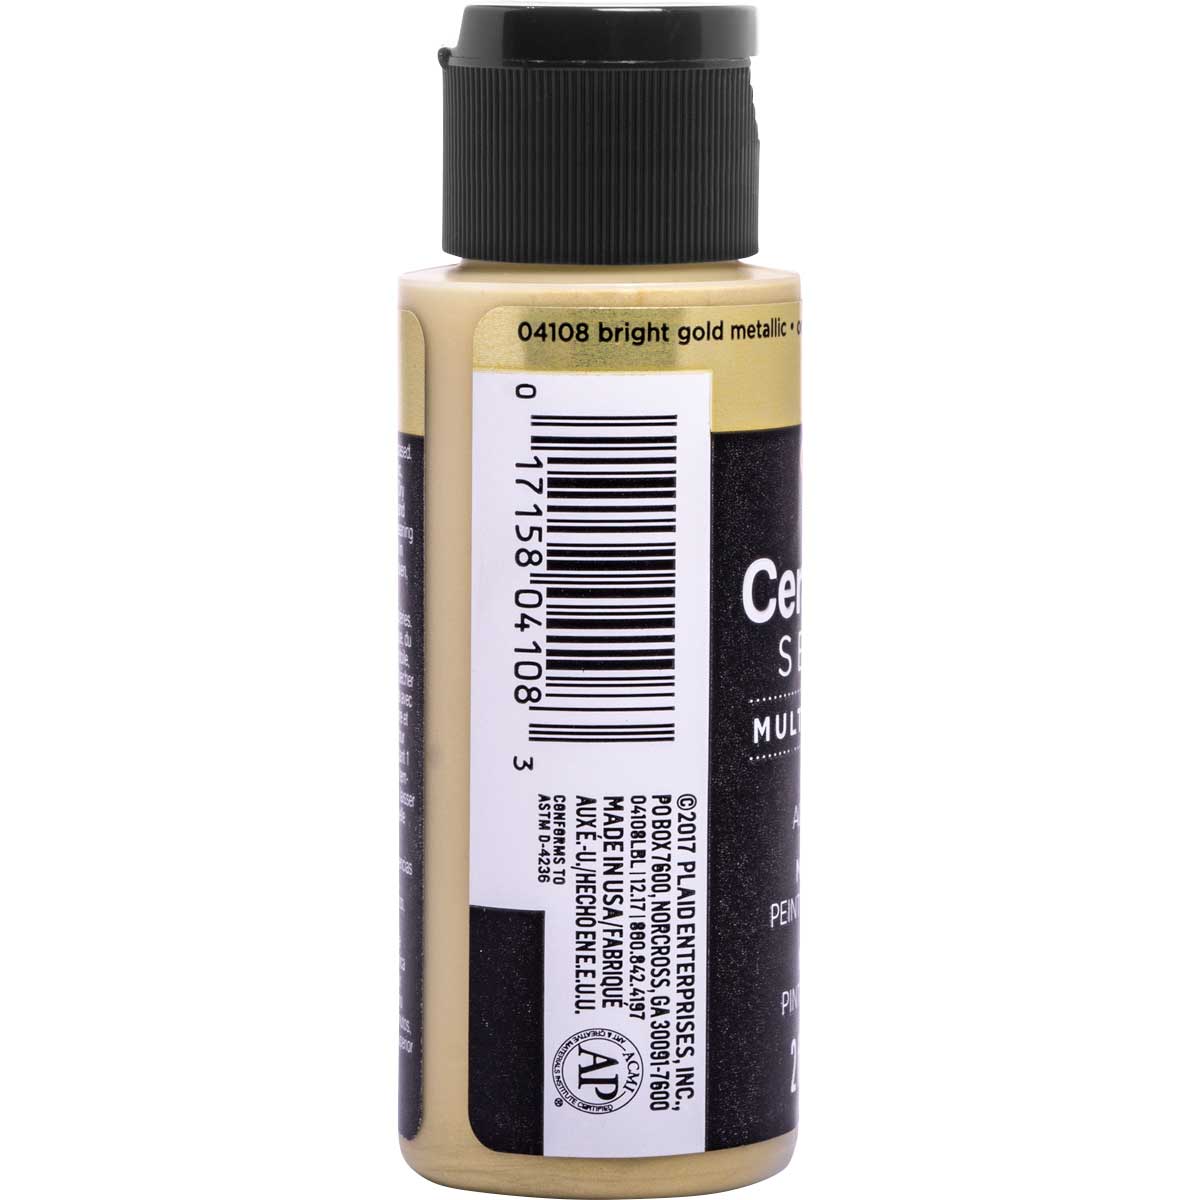 Delta Ceramcoat ® Select Multi-Surface Acrylic Paint - Metallic - Bright Gold, 2 oz. - 04108